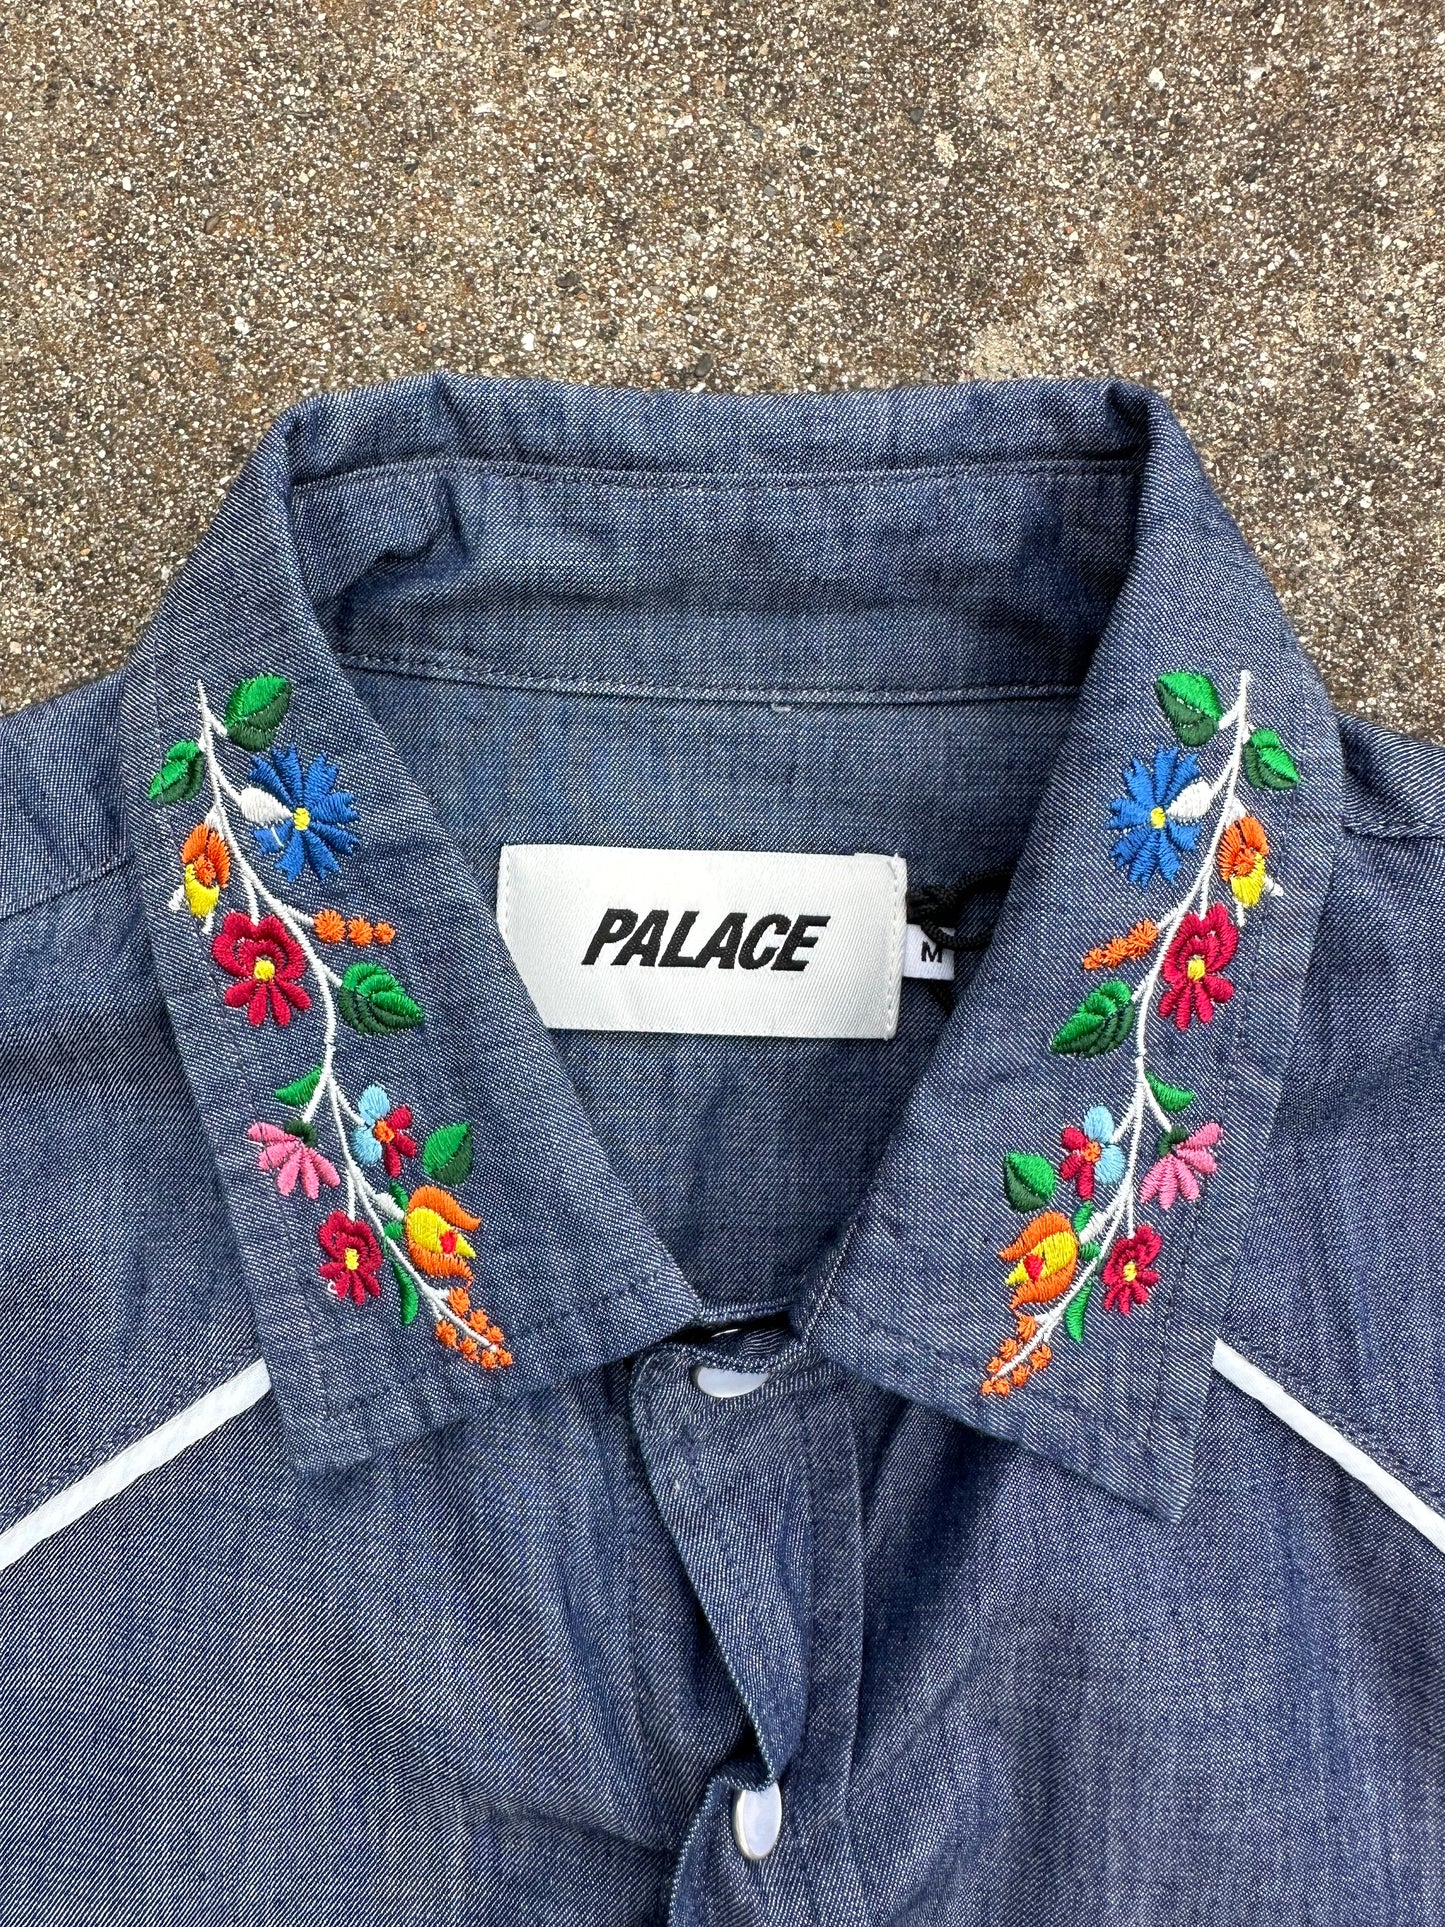 Palace Ye-Ha(M) Indigo Shirt SS20